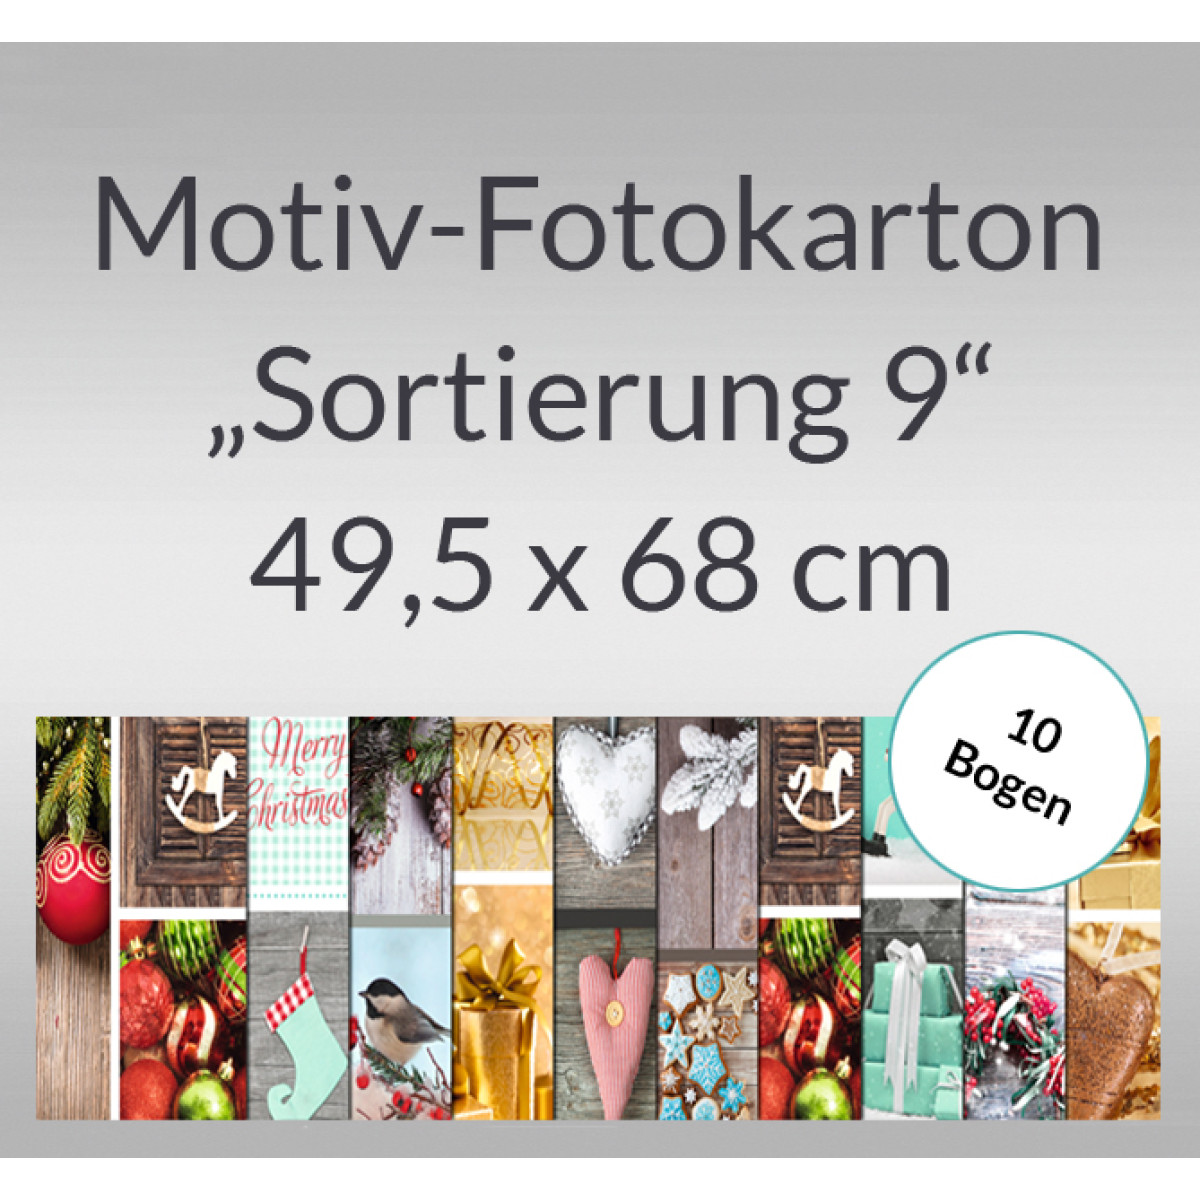 Motiv-Fotokarton "Sortierung 9" 49,5 x 68 cm - 10 Bogen